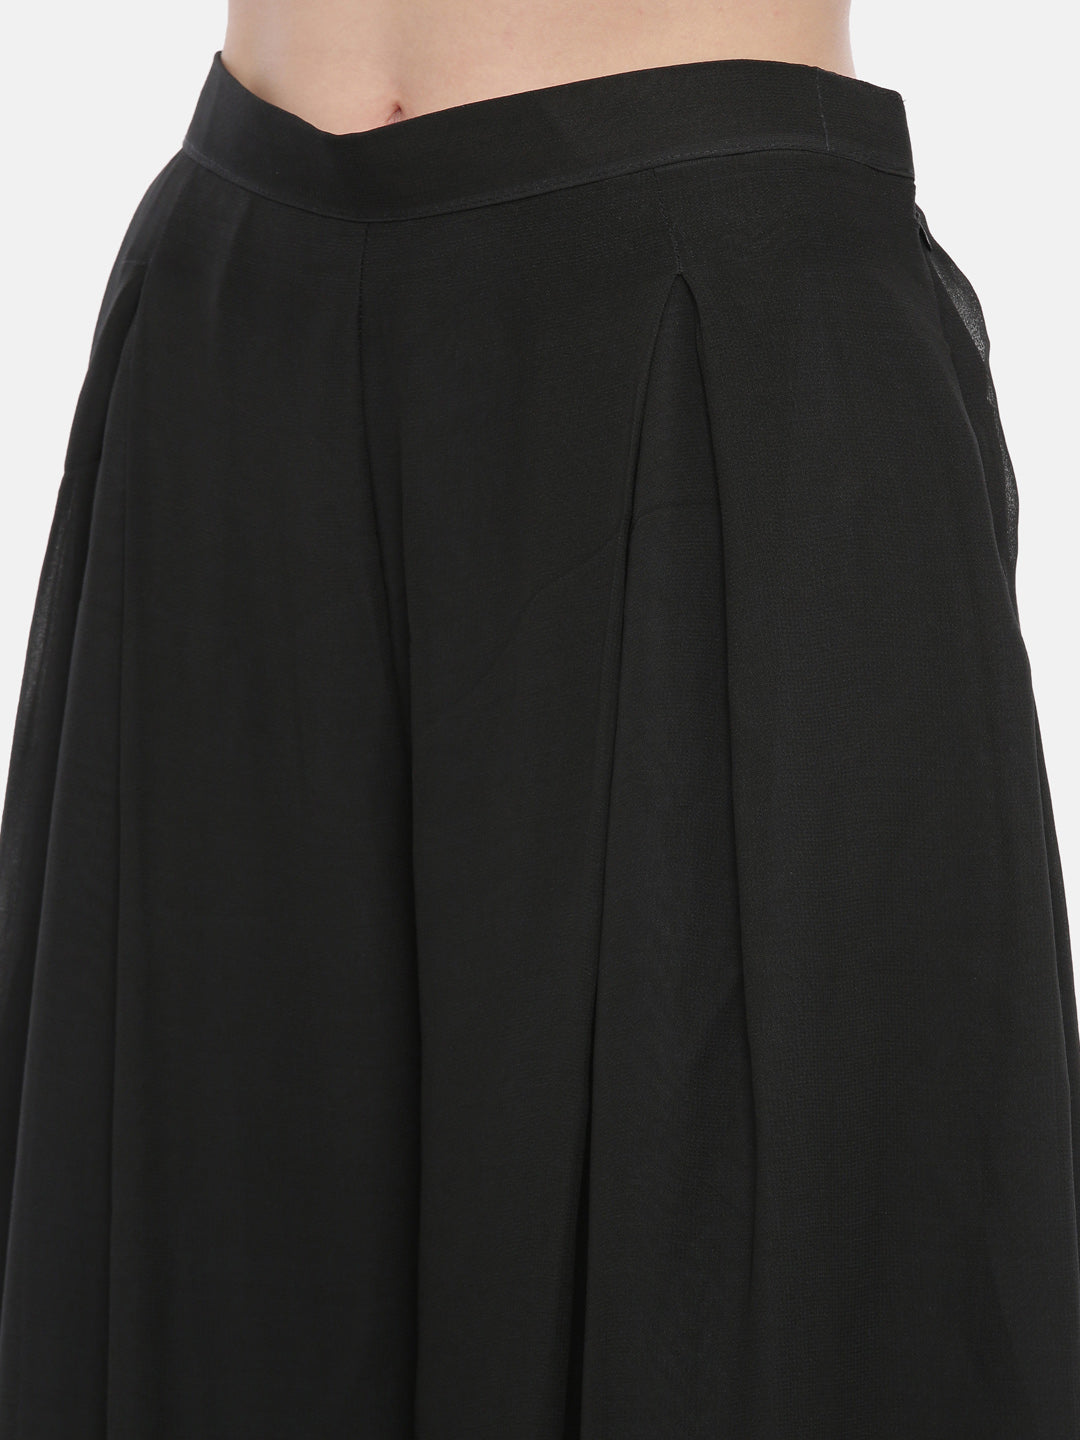 Neeru's Black Embroidered Top & Skirt Set With Shrug